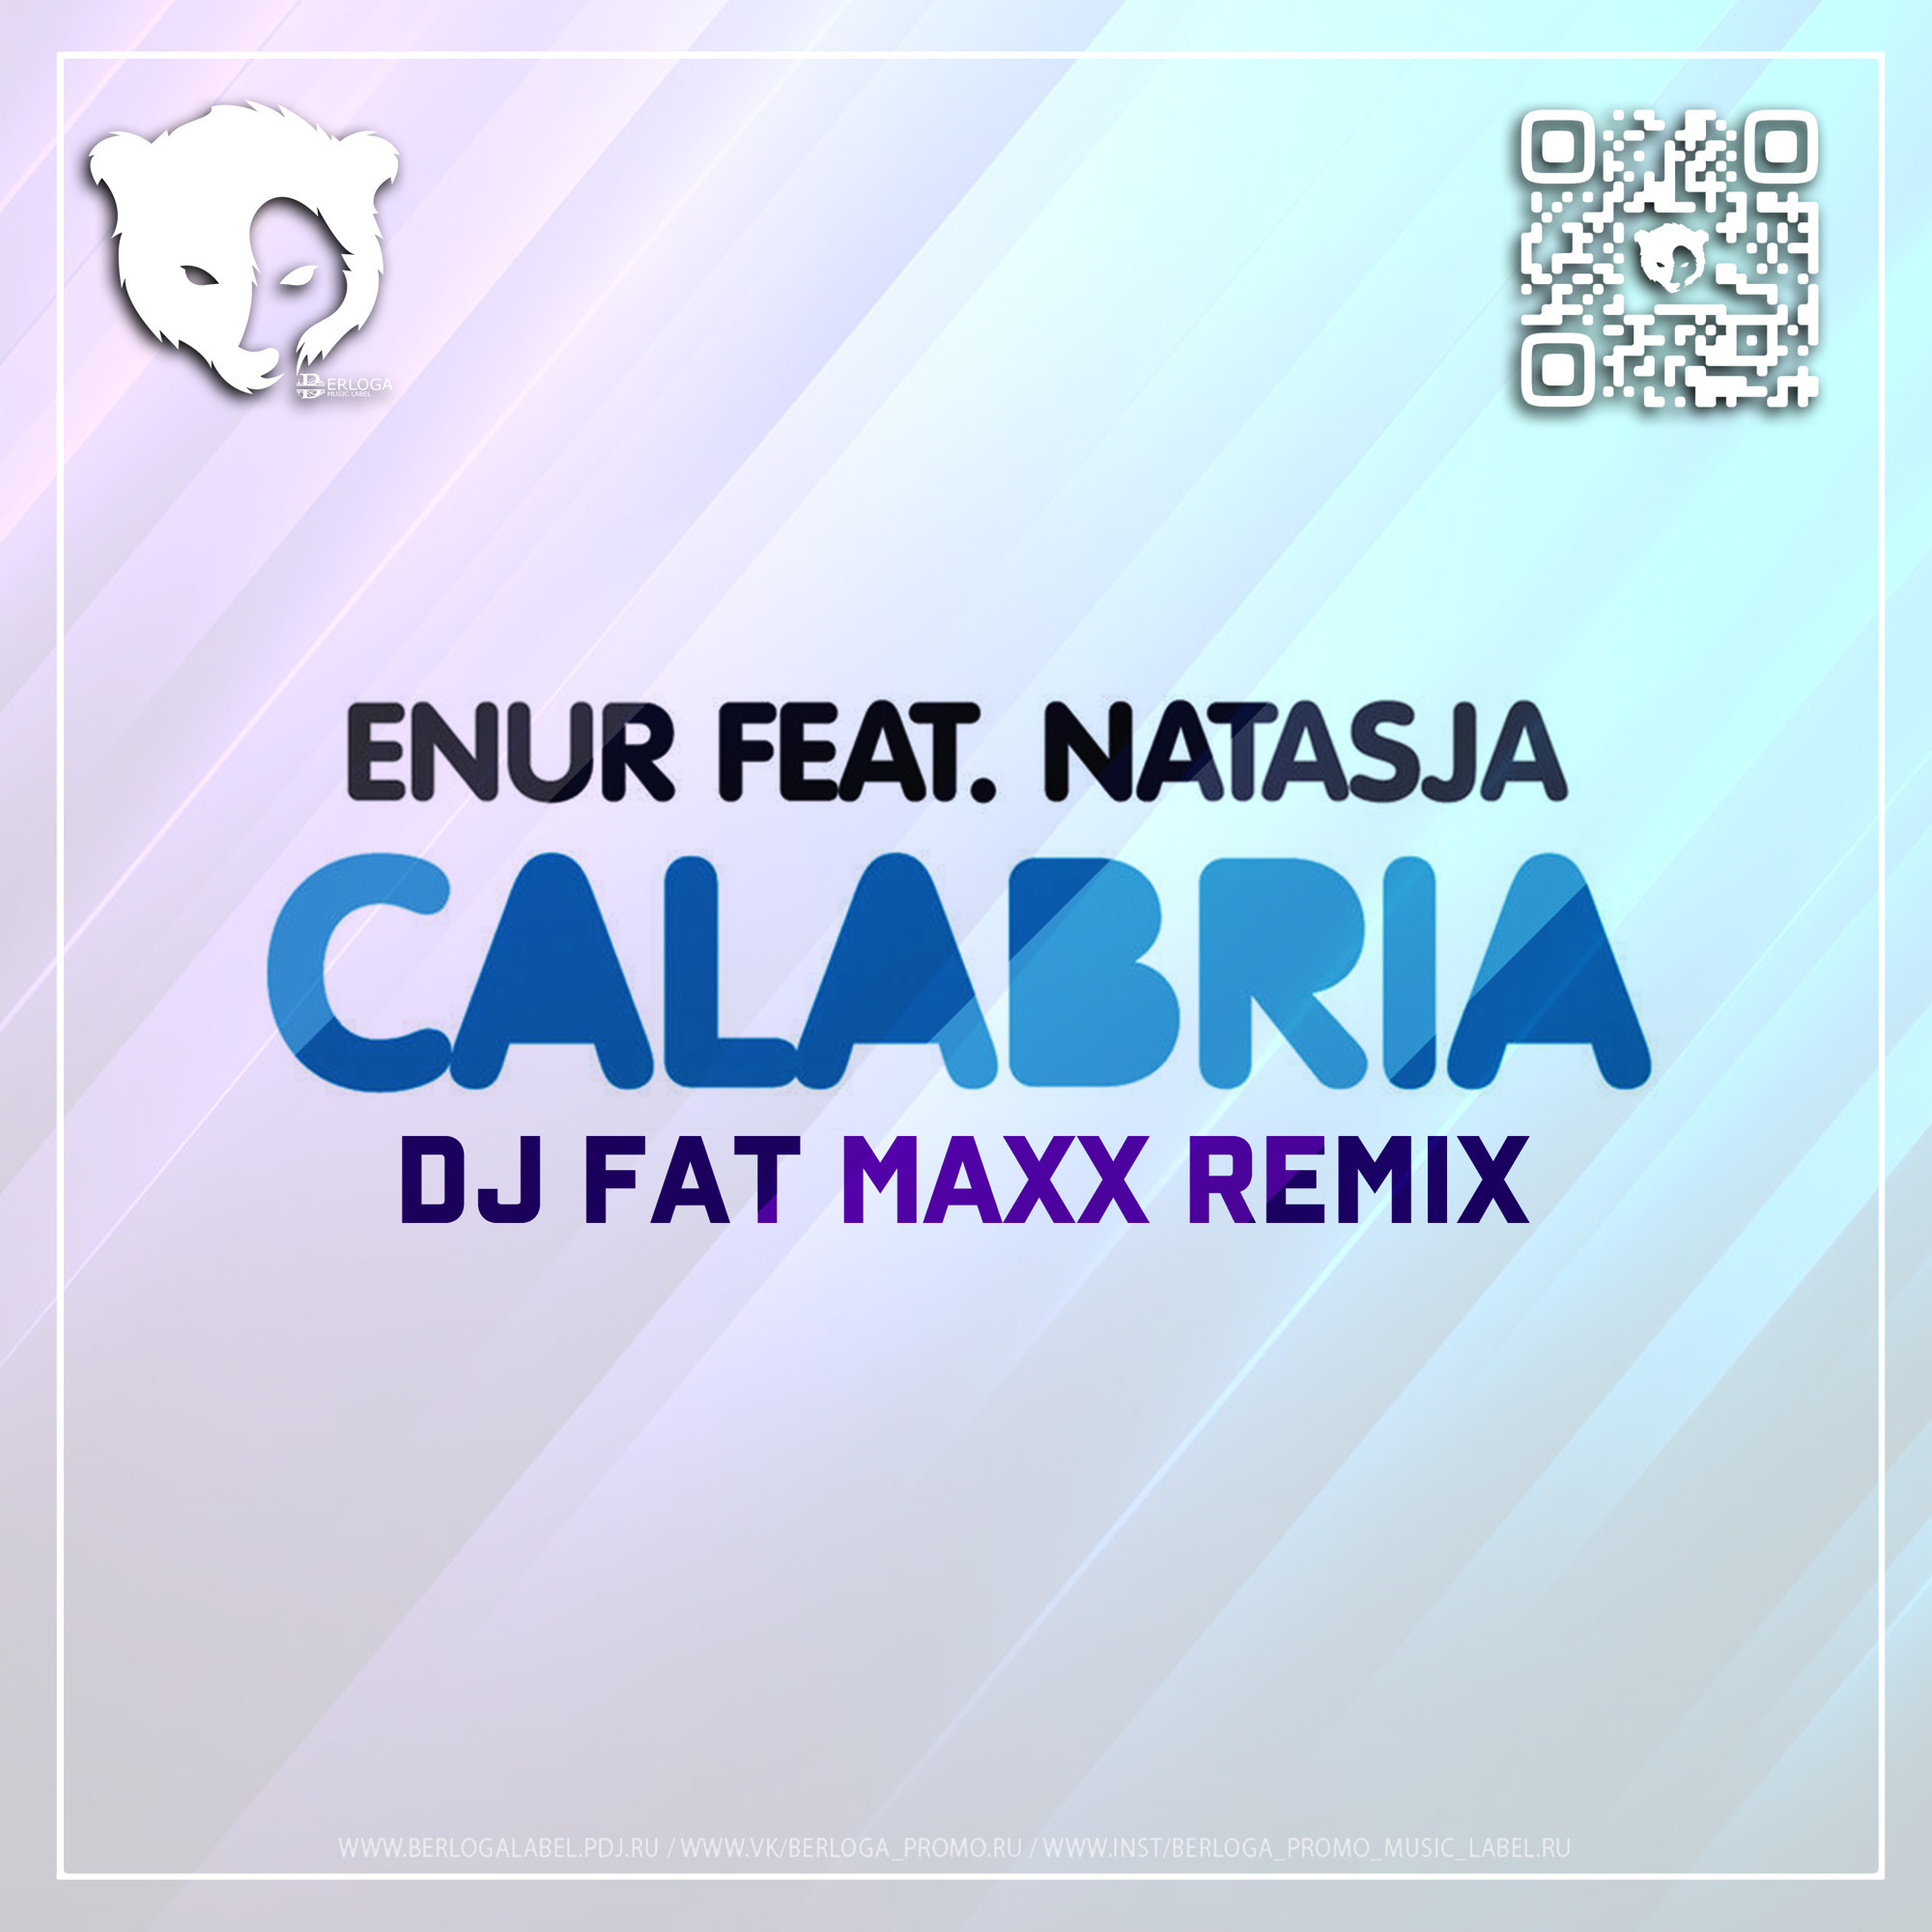 Дым бомбим dj fat maxx. Enur feat. Natasja Calabria 2007. Enur x Natasja - Calabria (DJ fat Maxx Remix). Get a way - Original + Remixes Maxx.